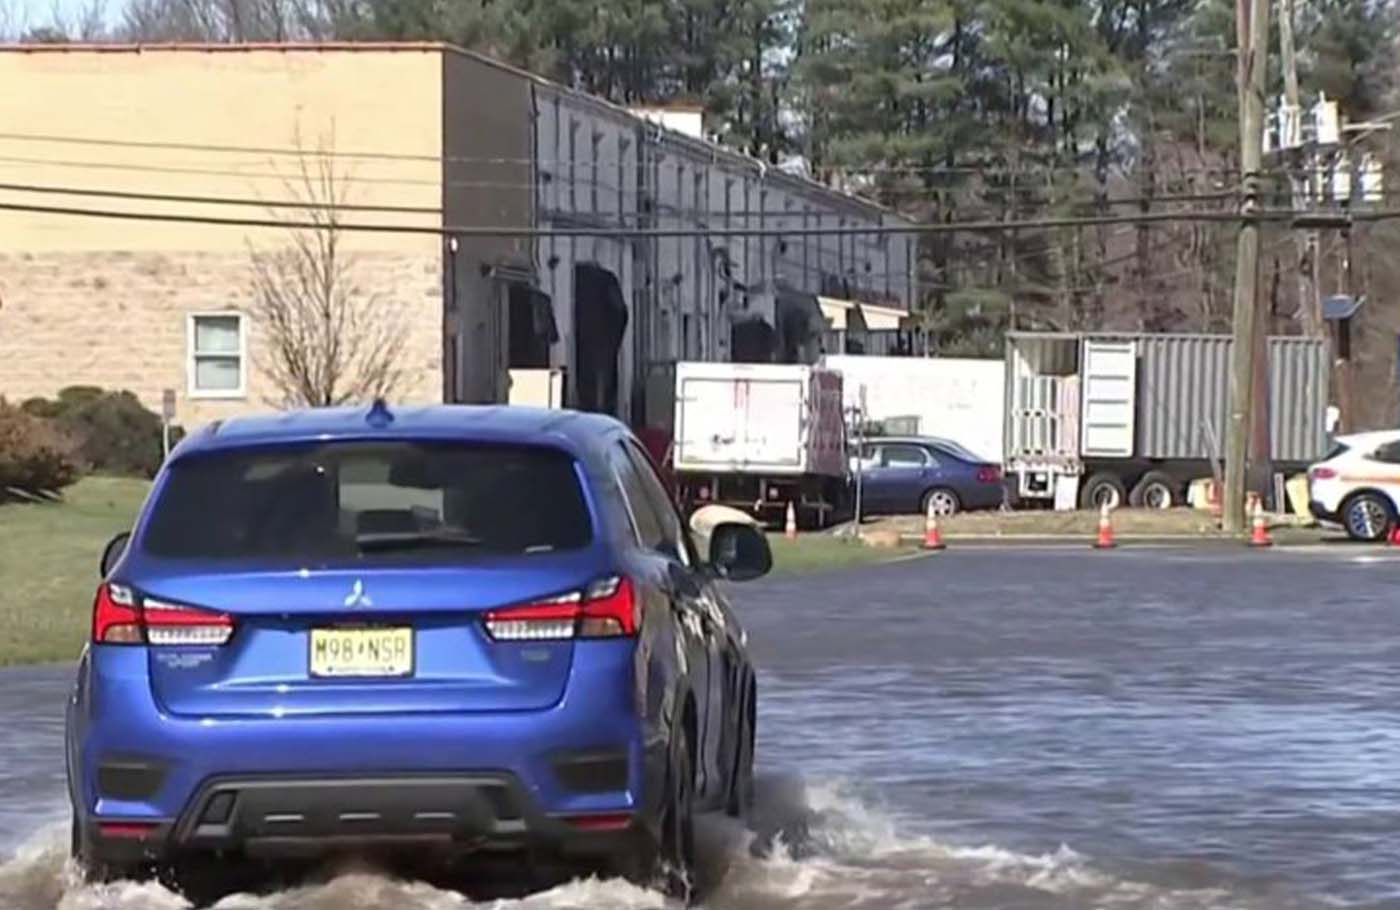 Lingering flooding still impacting NJ communities